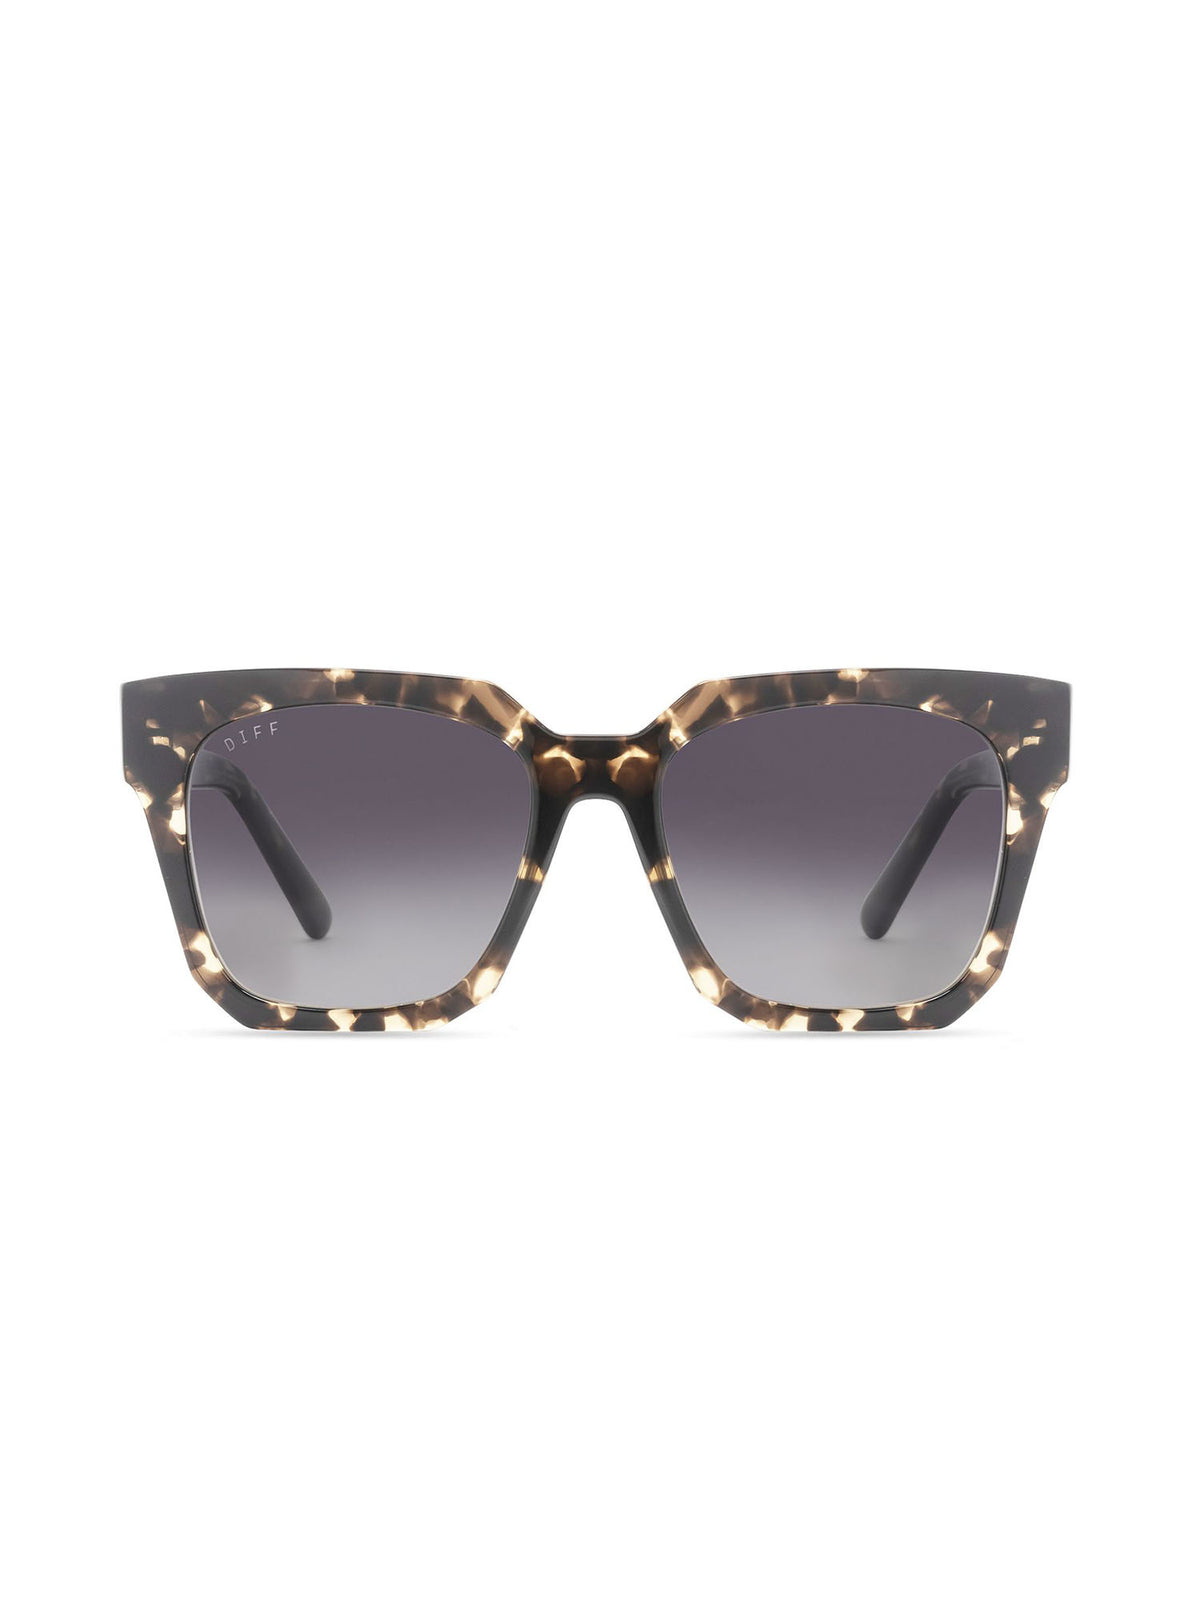 diff eyewear ariana sunglasses in espresso tortoise grey gradient polarized